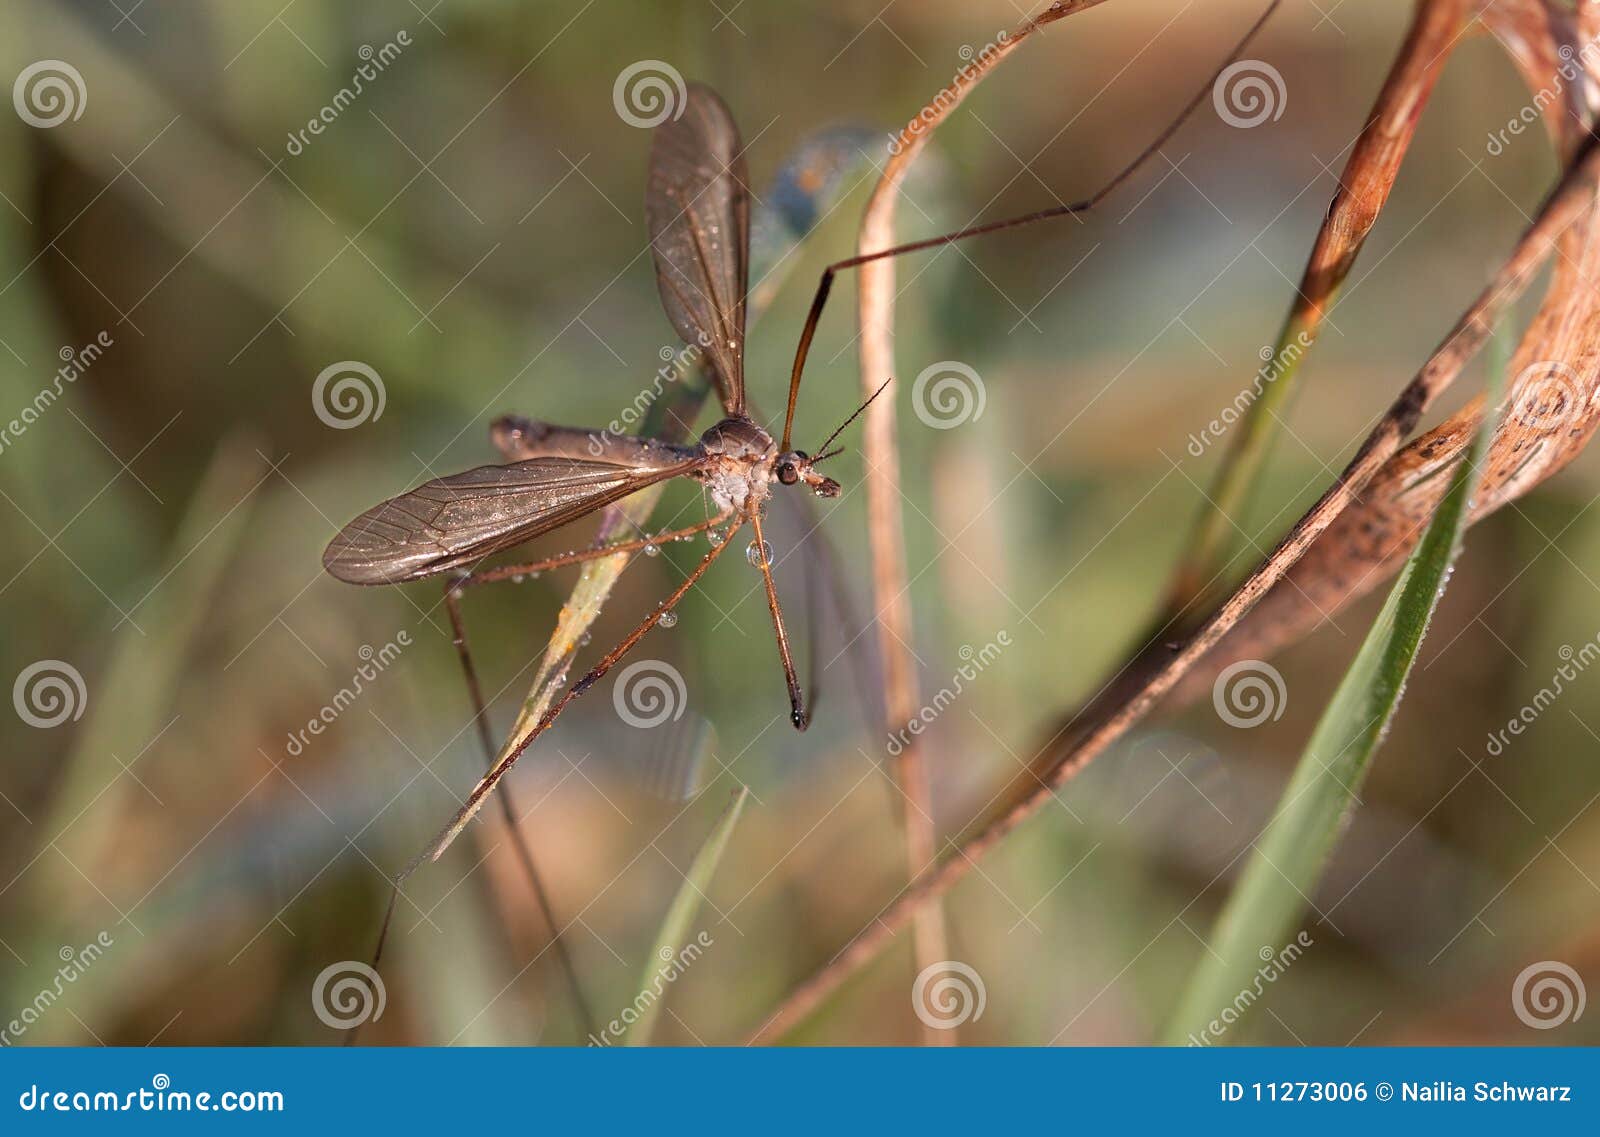 european large crane fly, tipula maxima